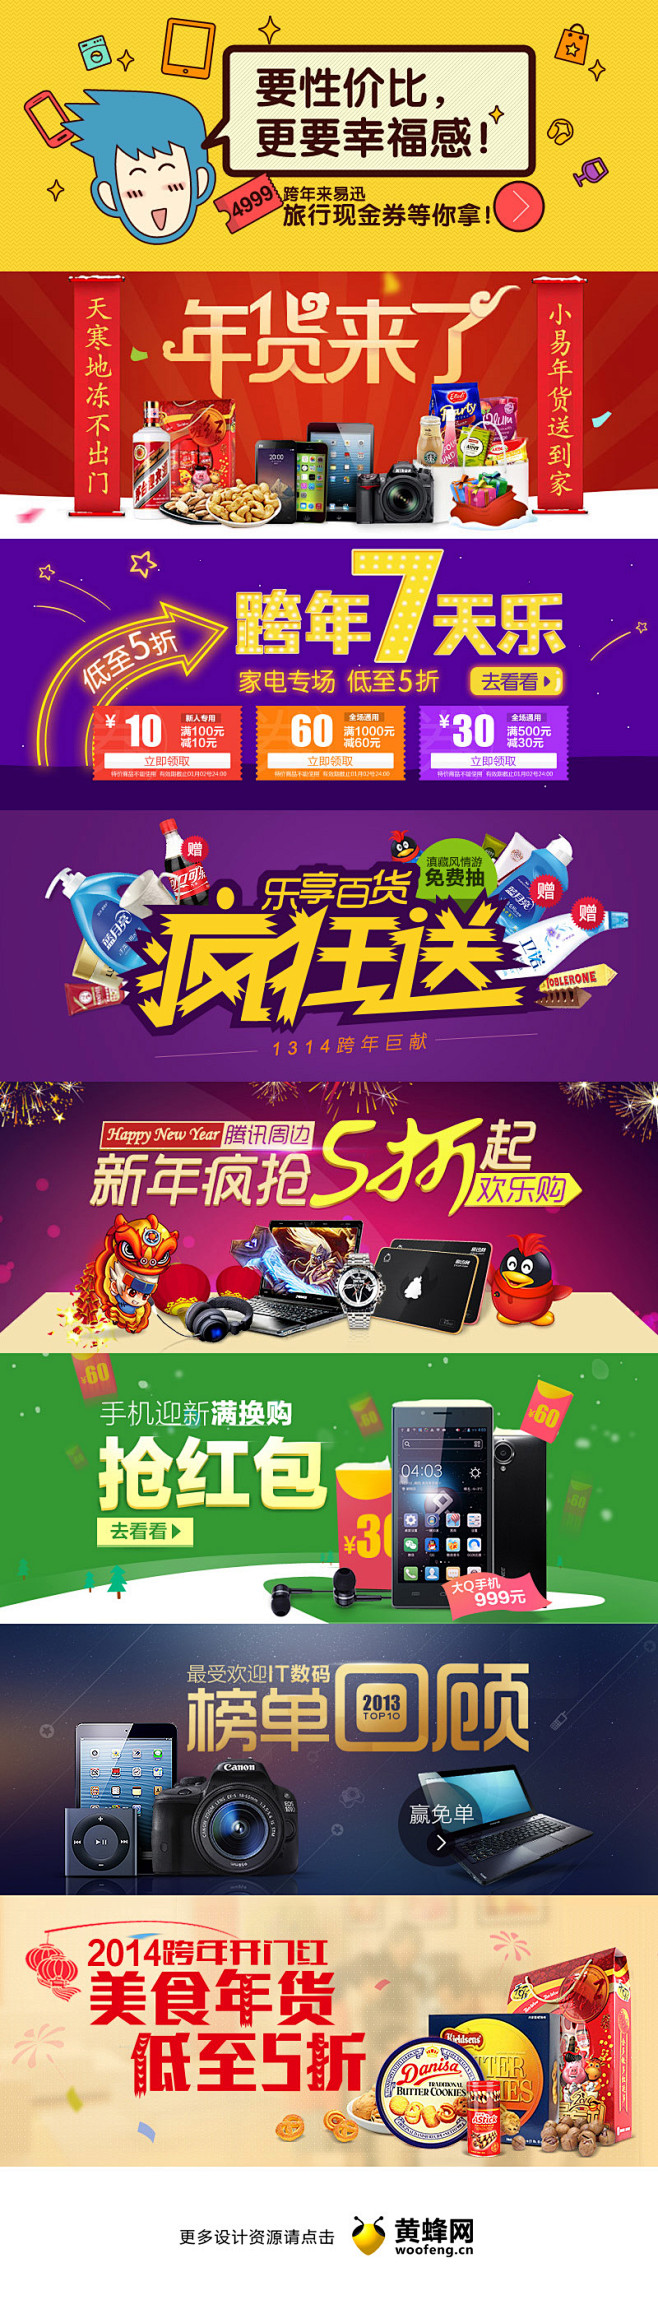 易讯网新年活动图片Banner设计 